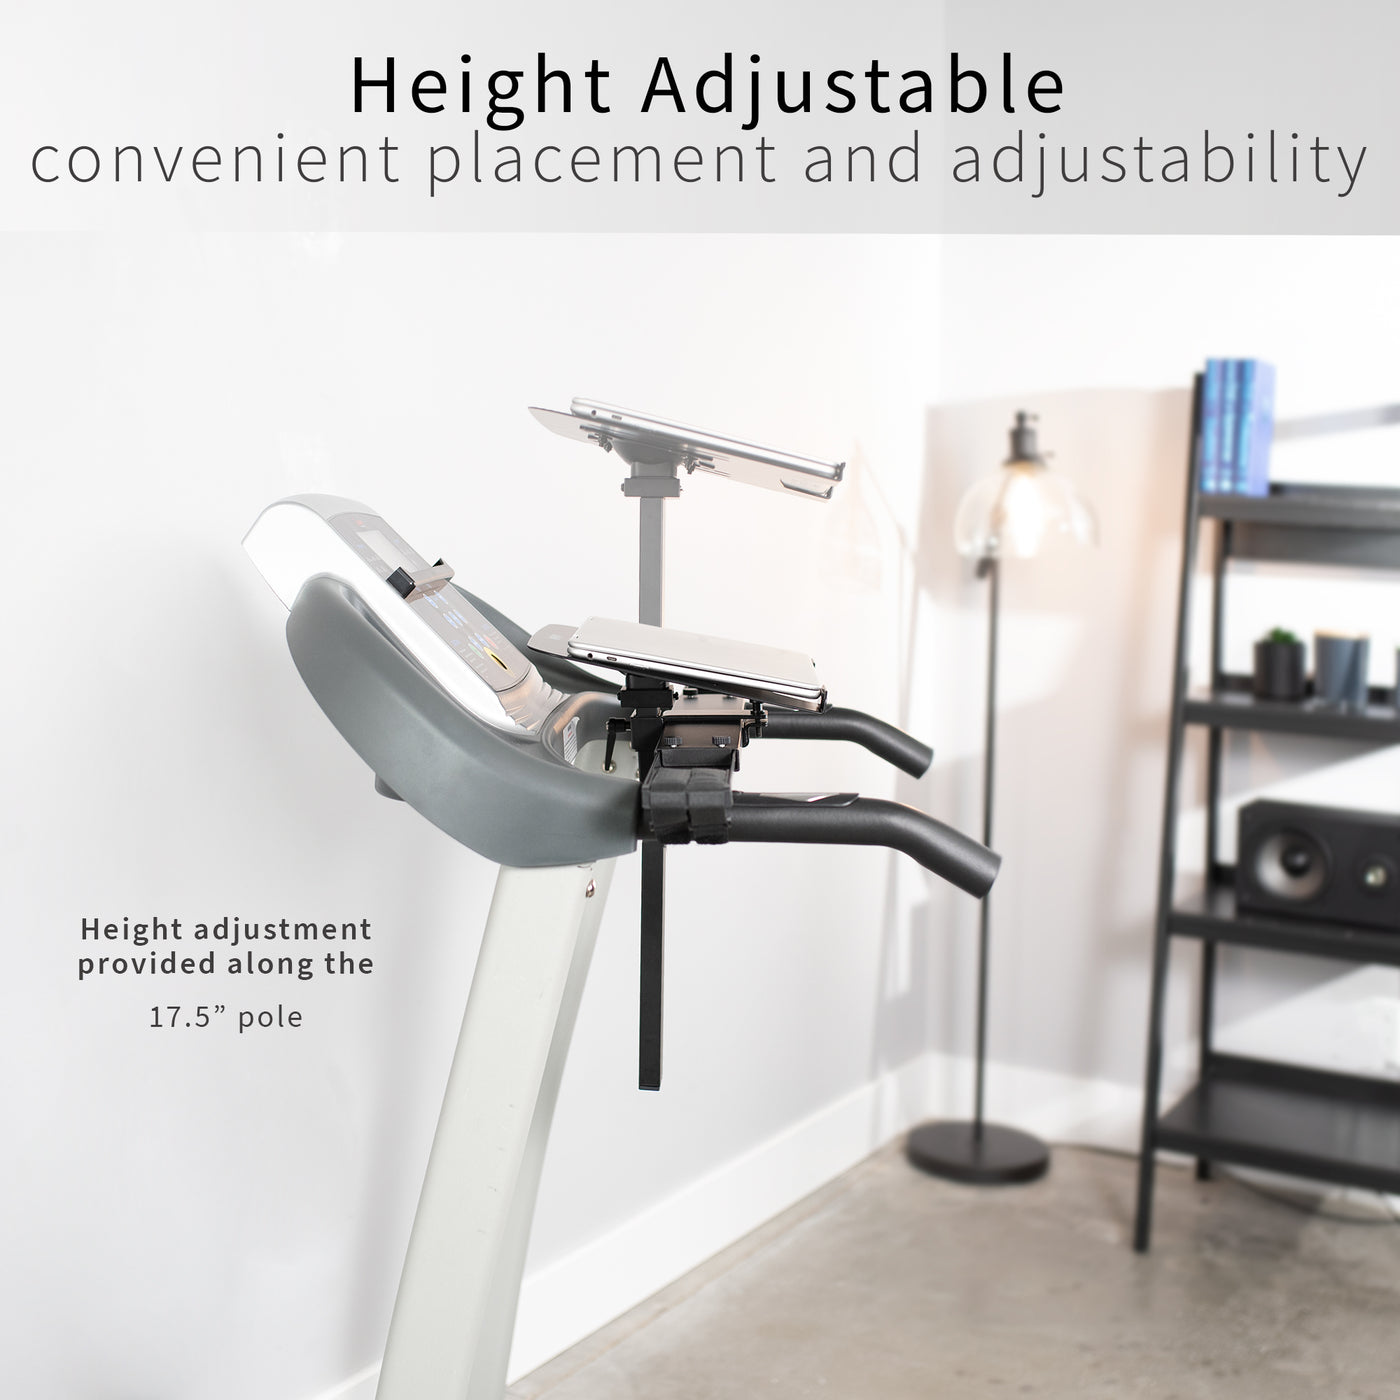 Height adjustable treadmill workstation from VIVO.